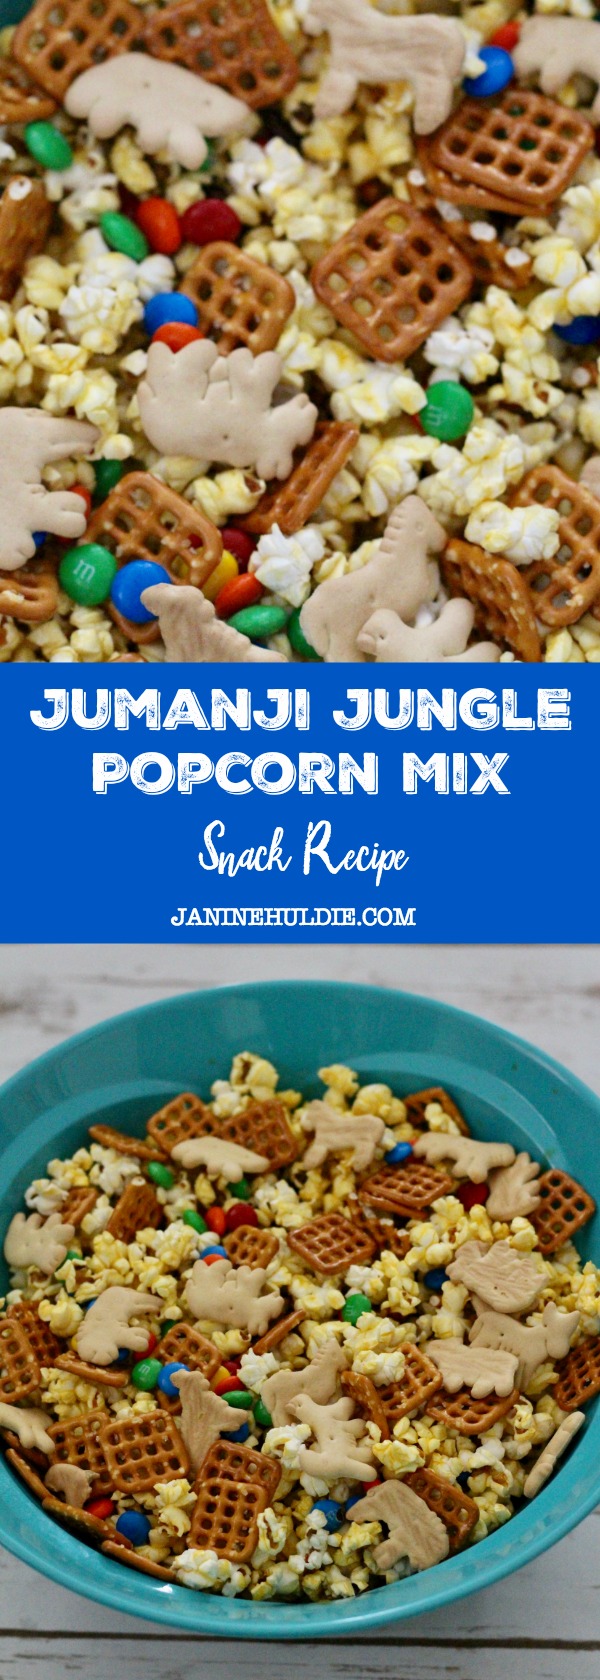 Jumanji Jungle Popcorn Mix Snack Recipe